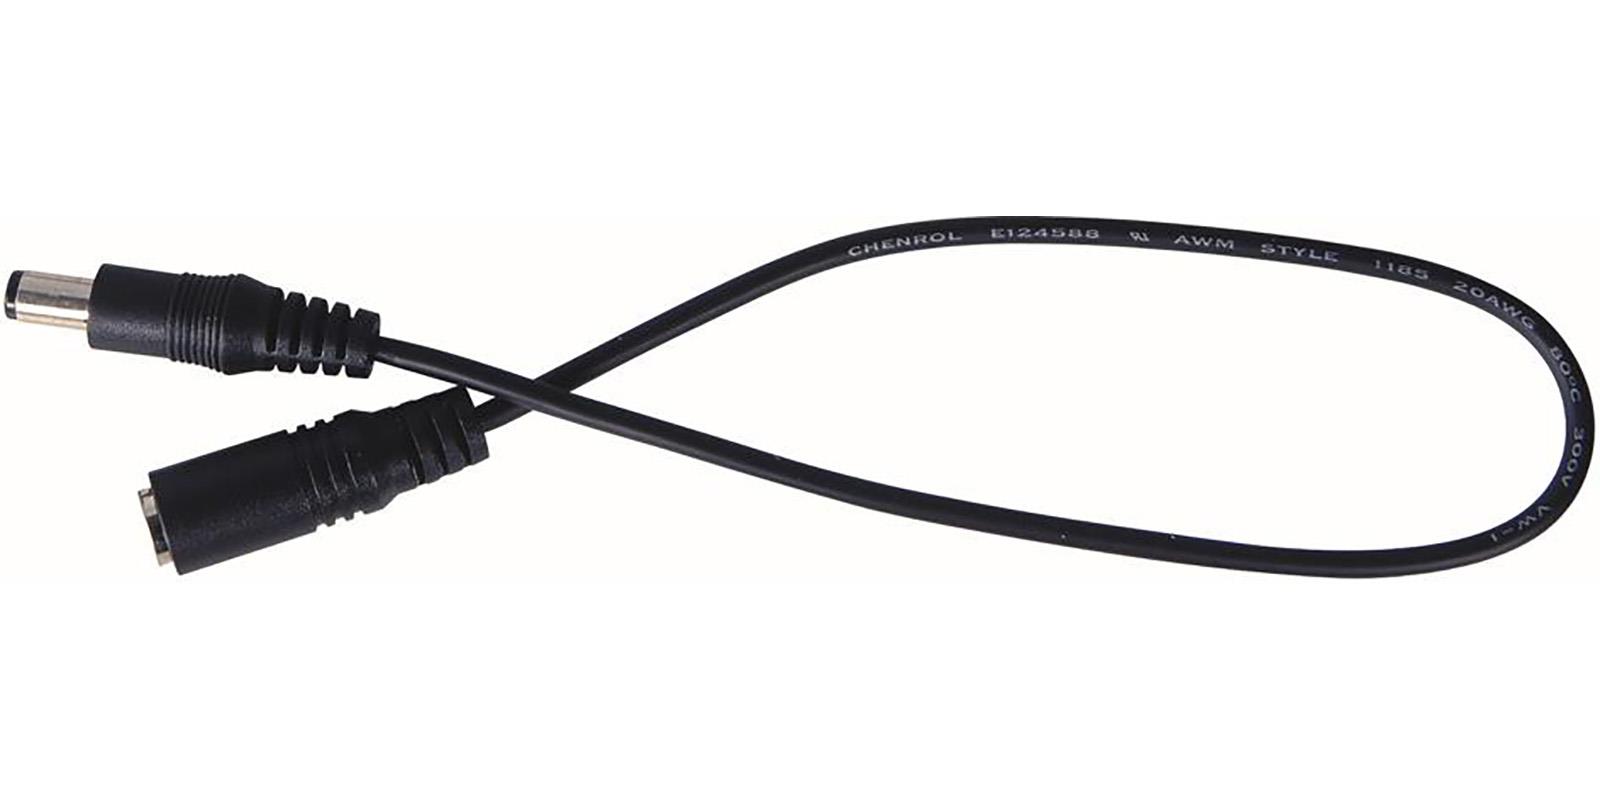 PS07 - 30cm Extension cable - black